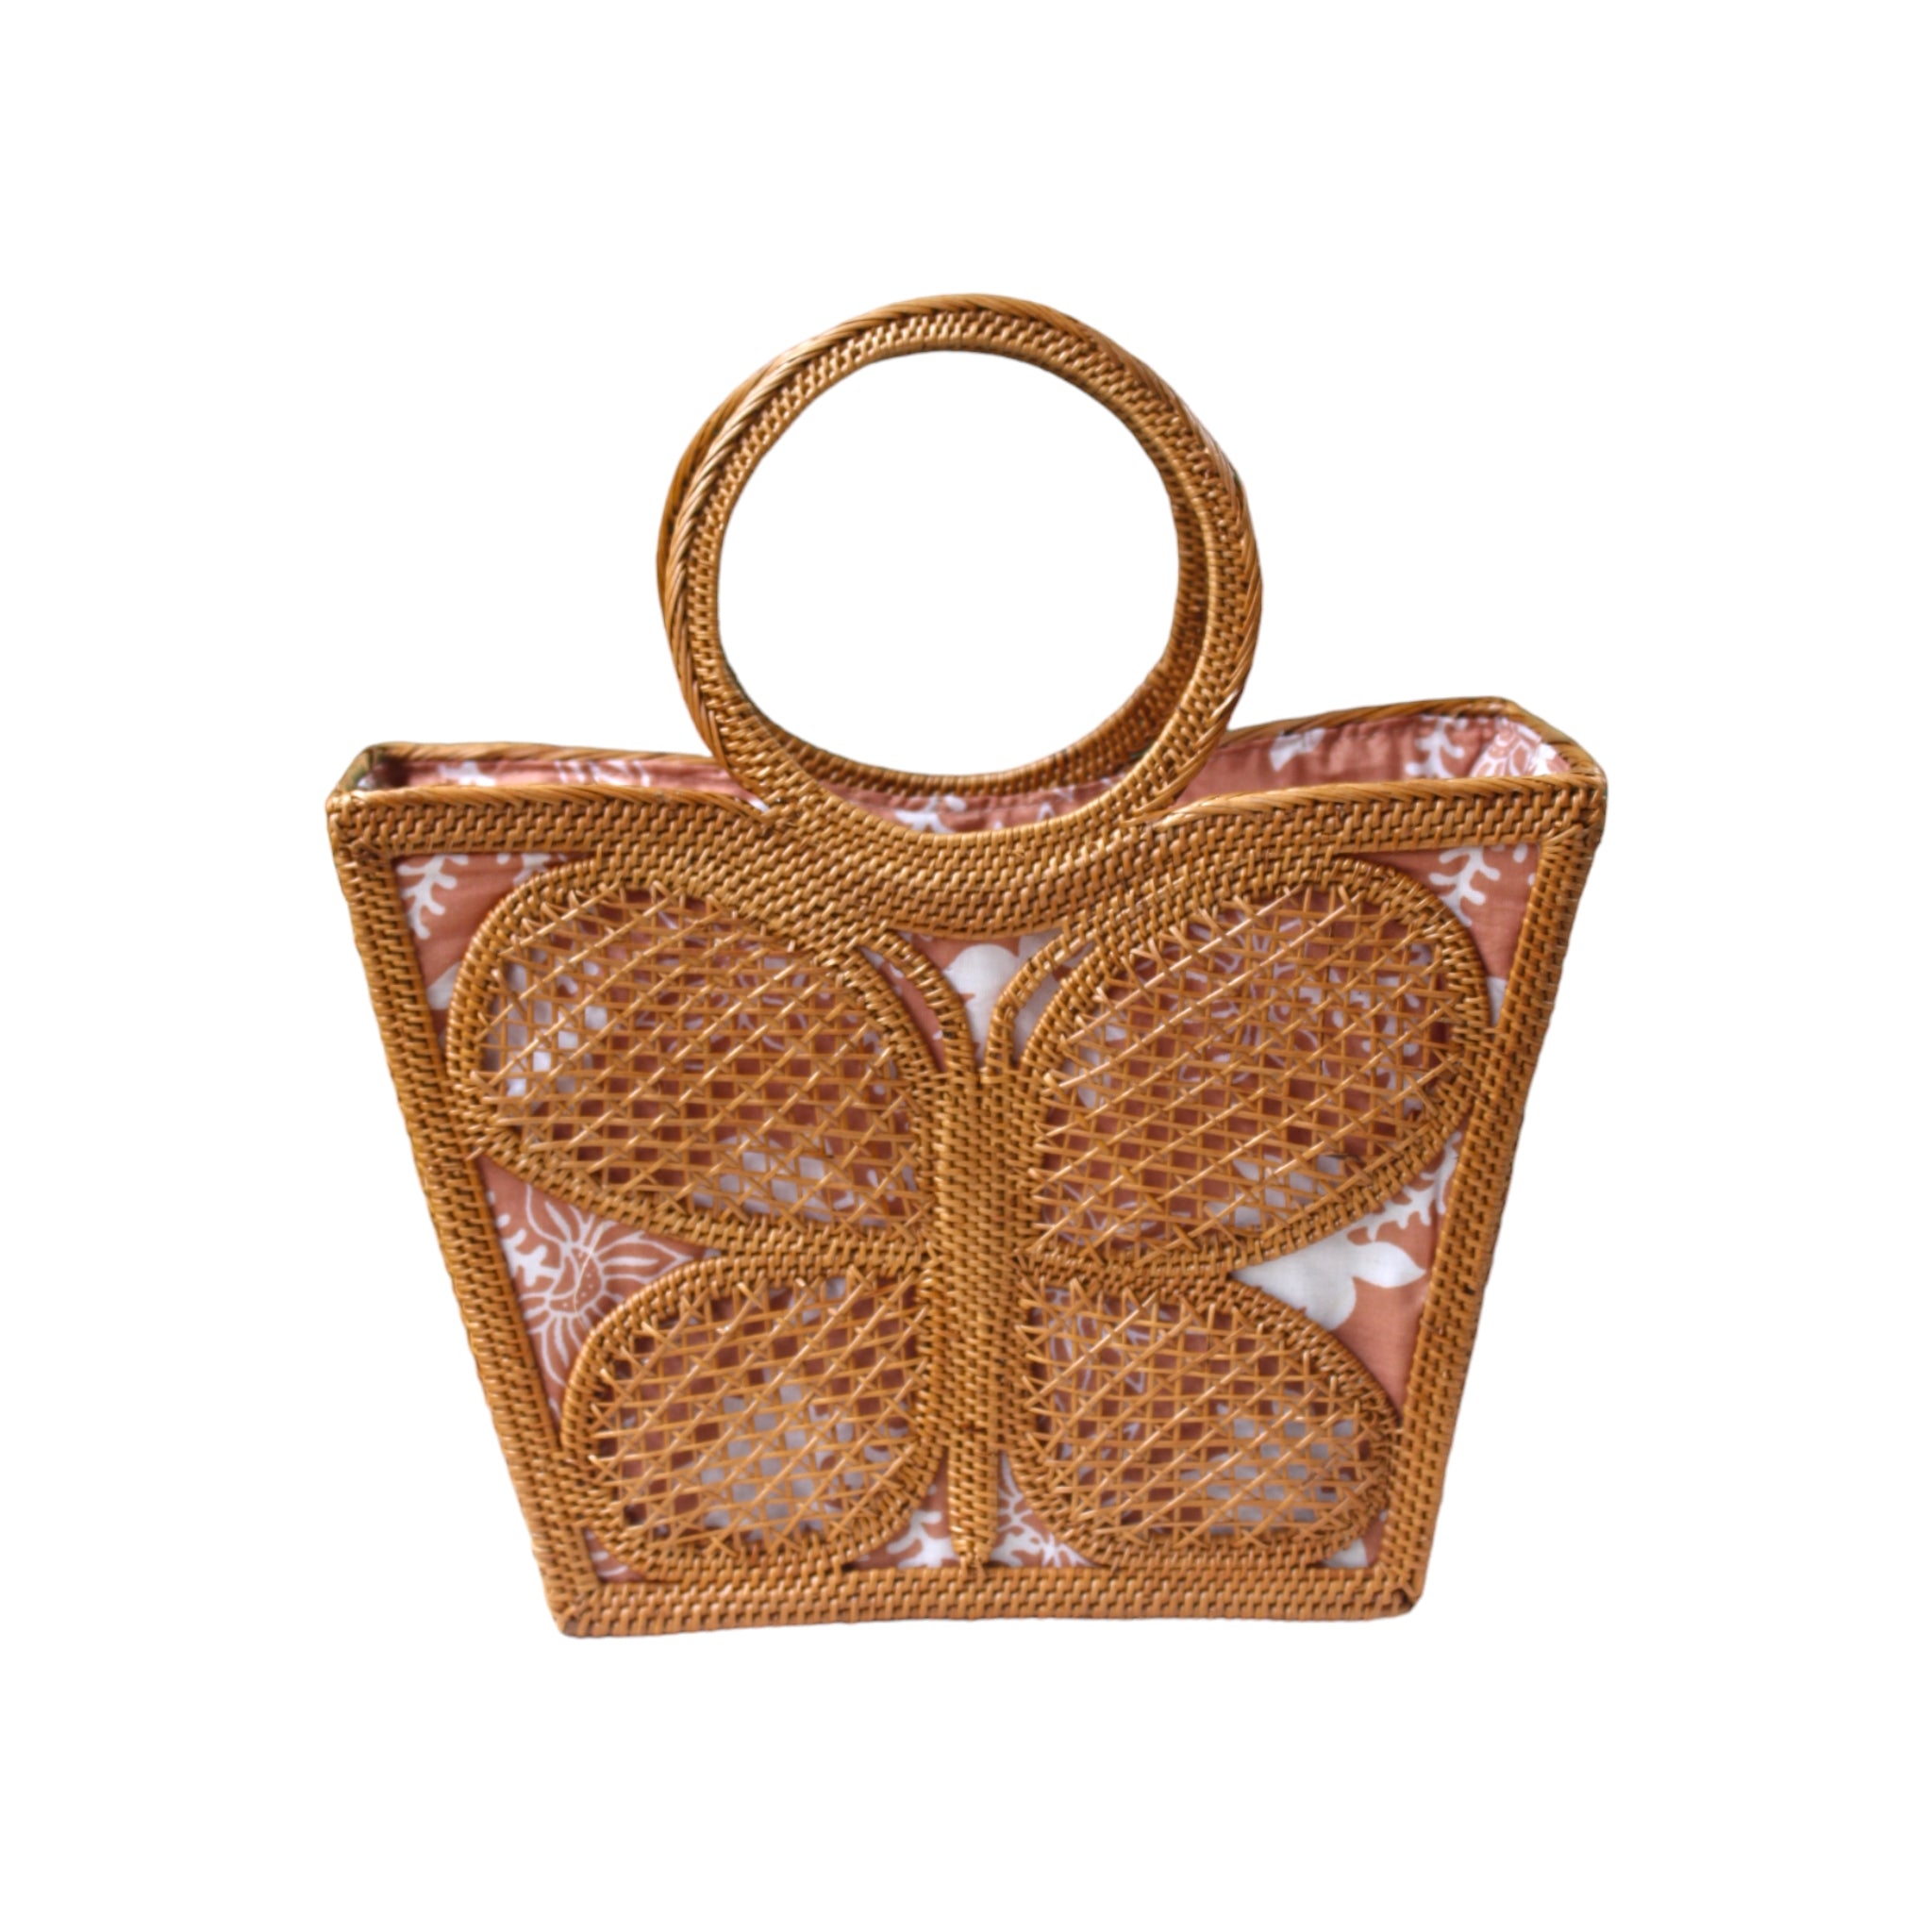 Butterfly shaped rattan bali handle basket bag 